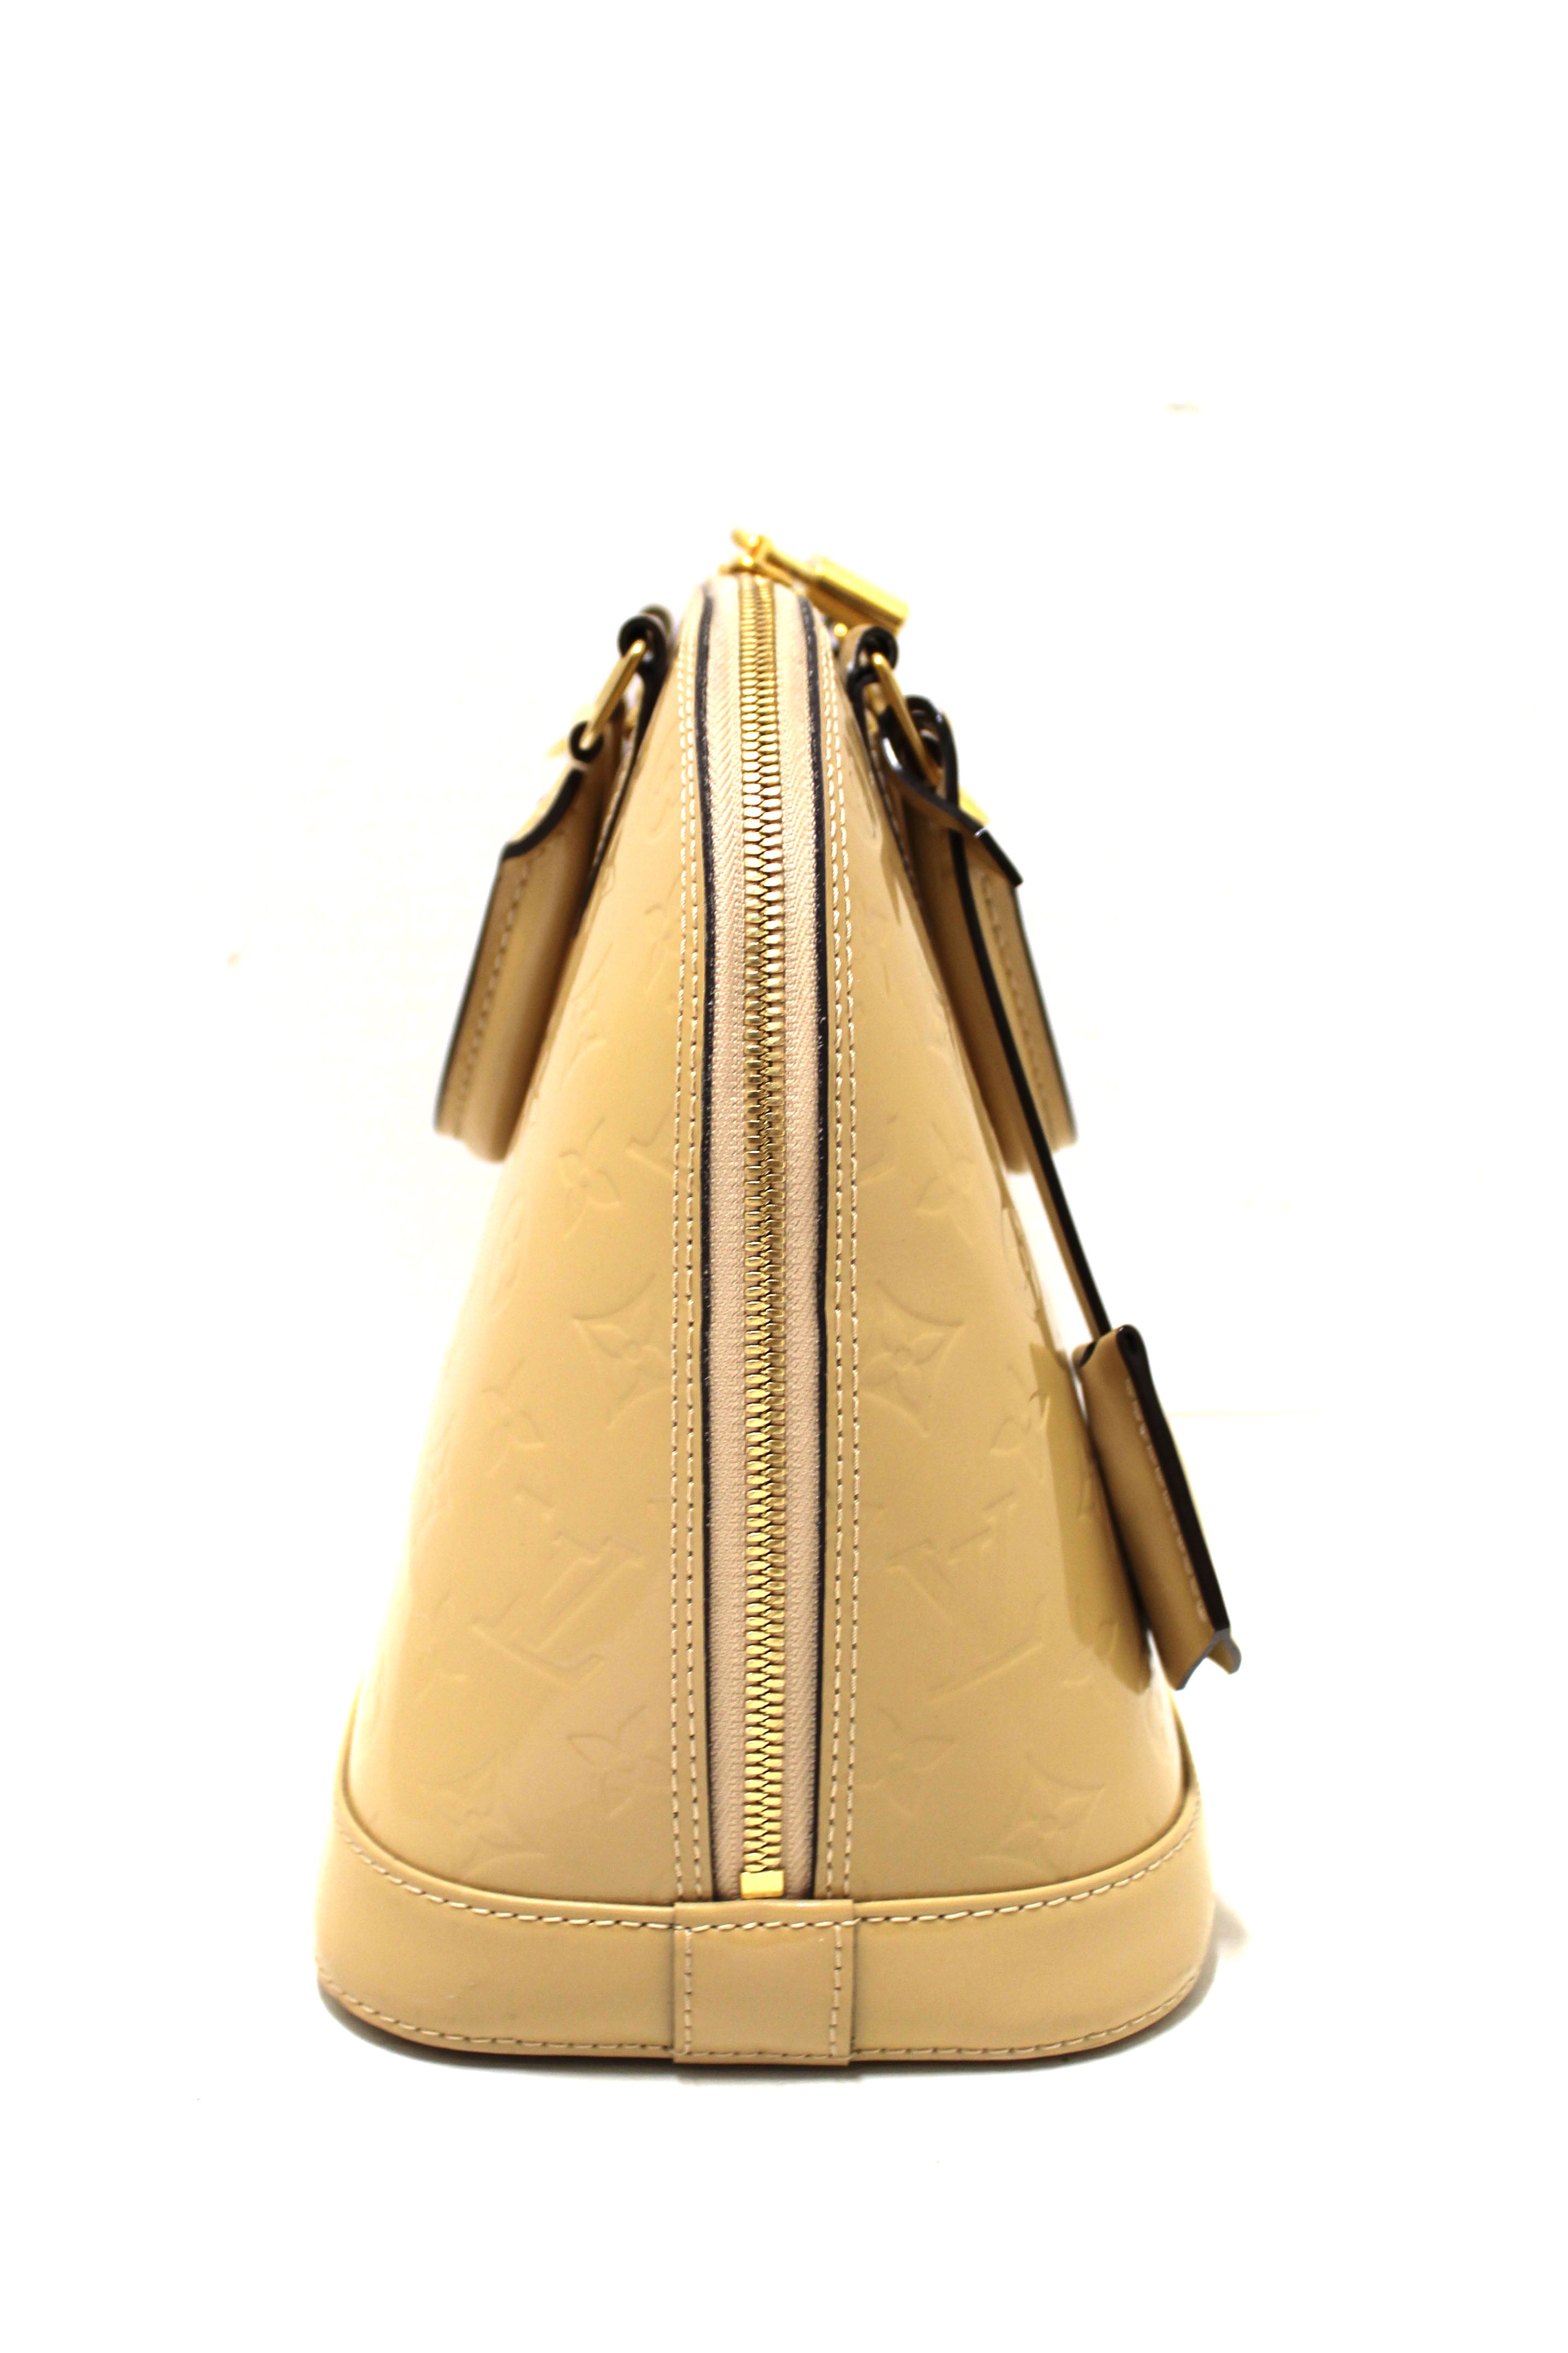 Authentic Louis Vuitton Yellow Monogram Vernis Leather Alma PM Handbag